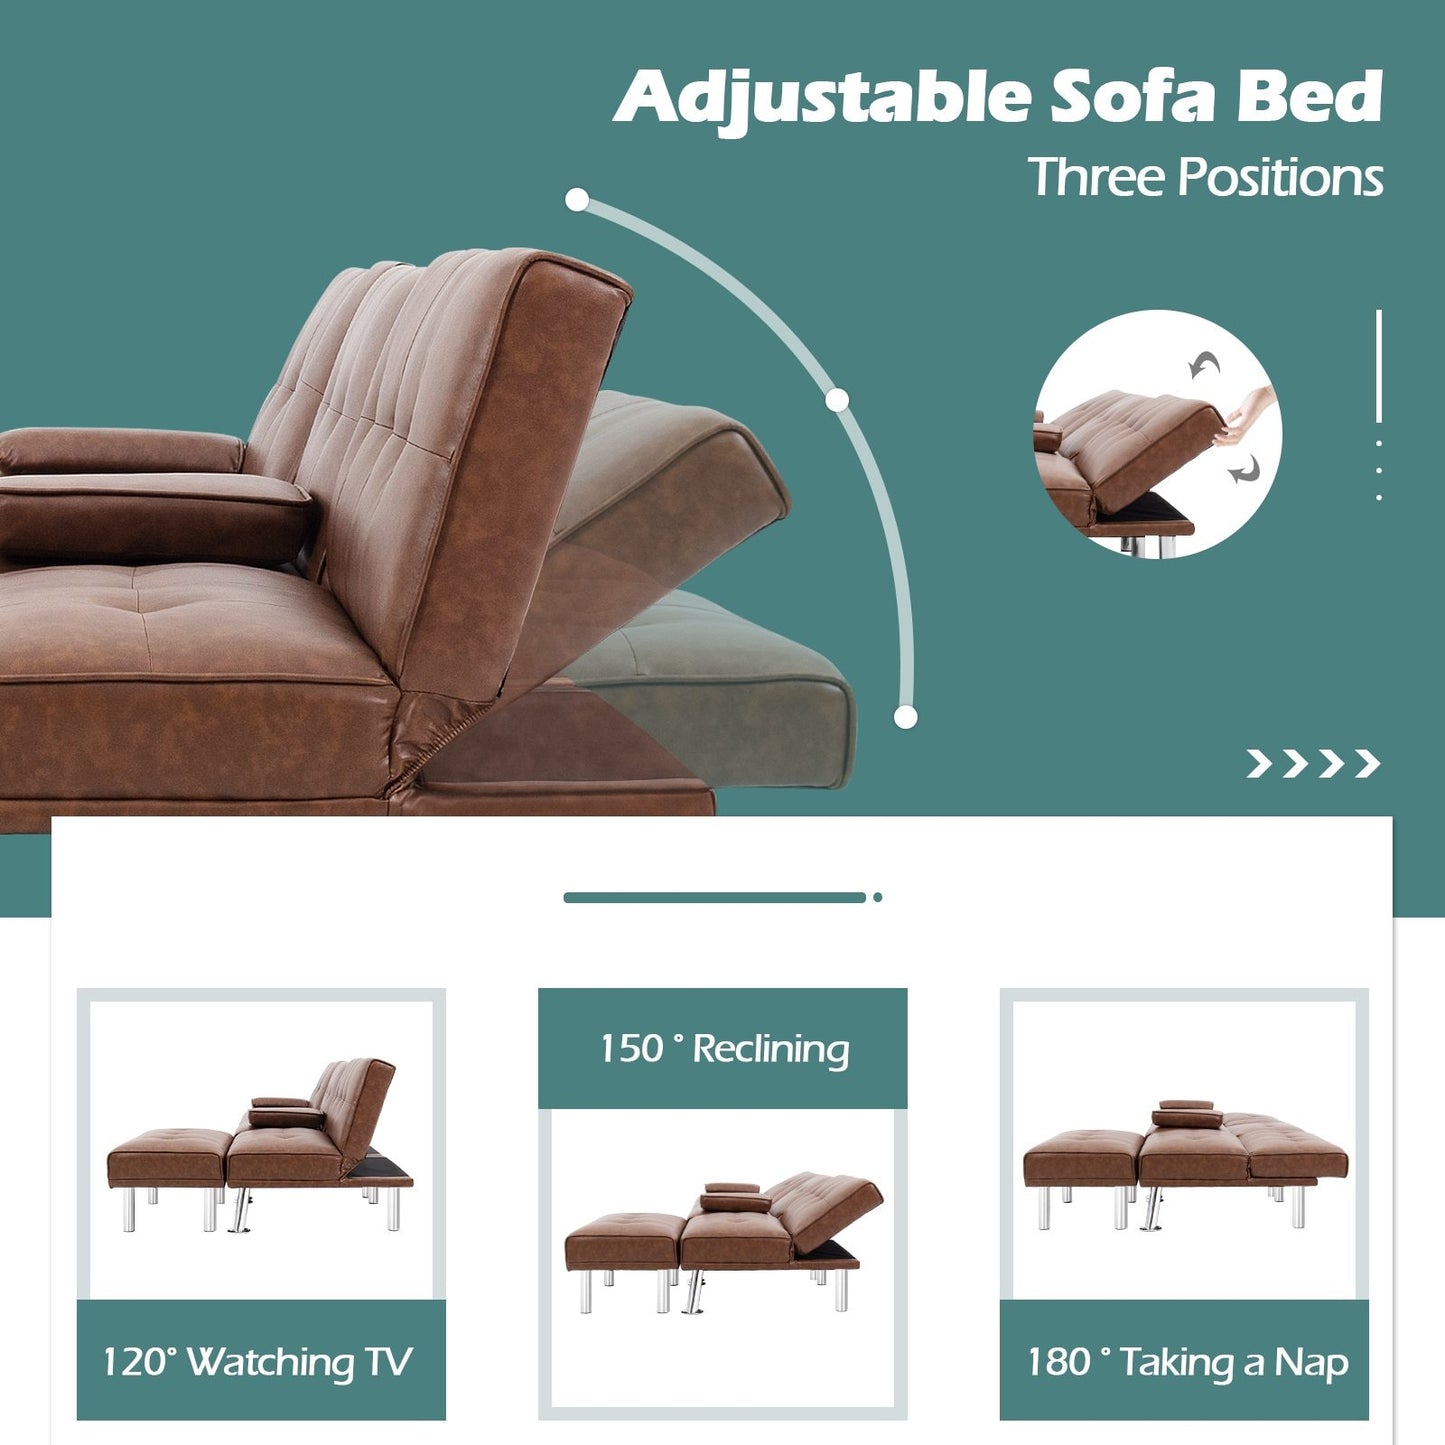 3-Piece Convertible Sectional Sofa